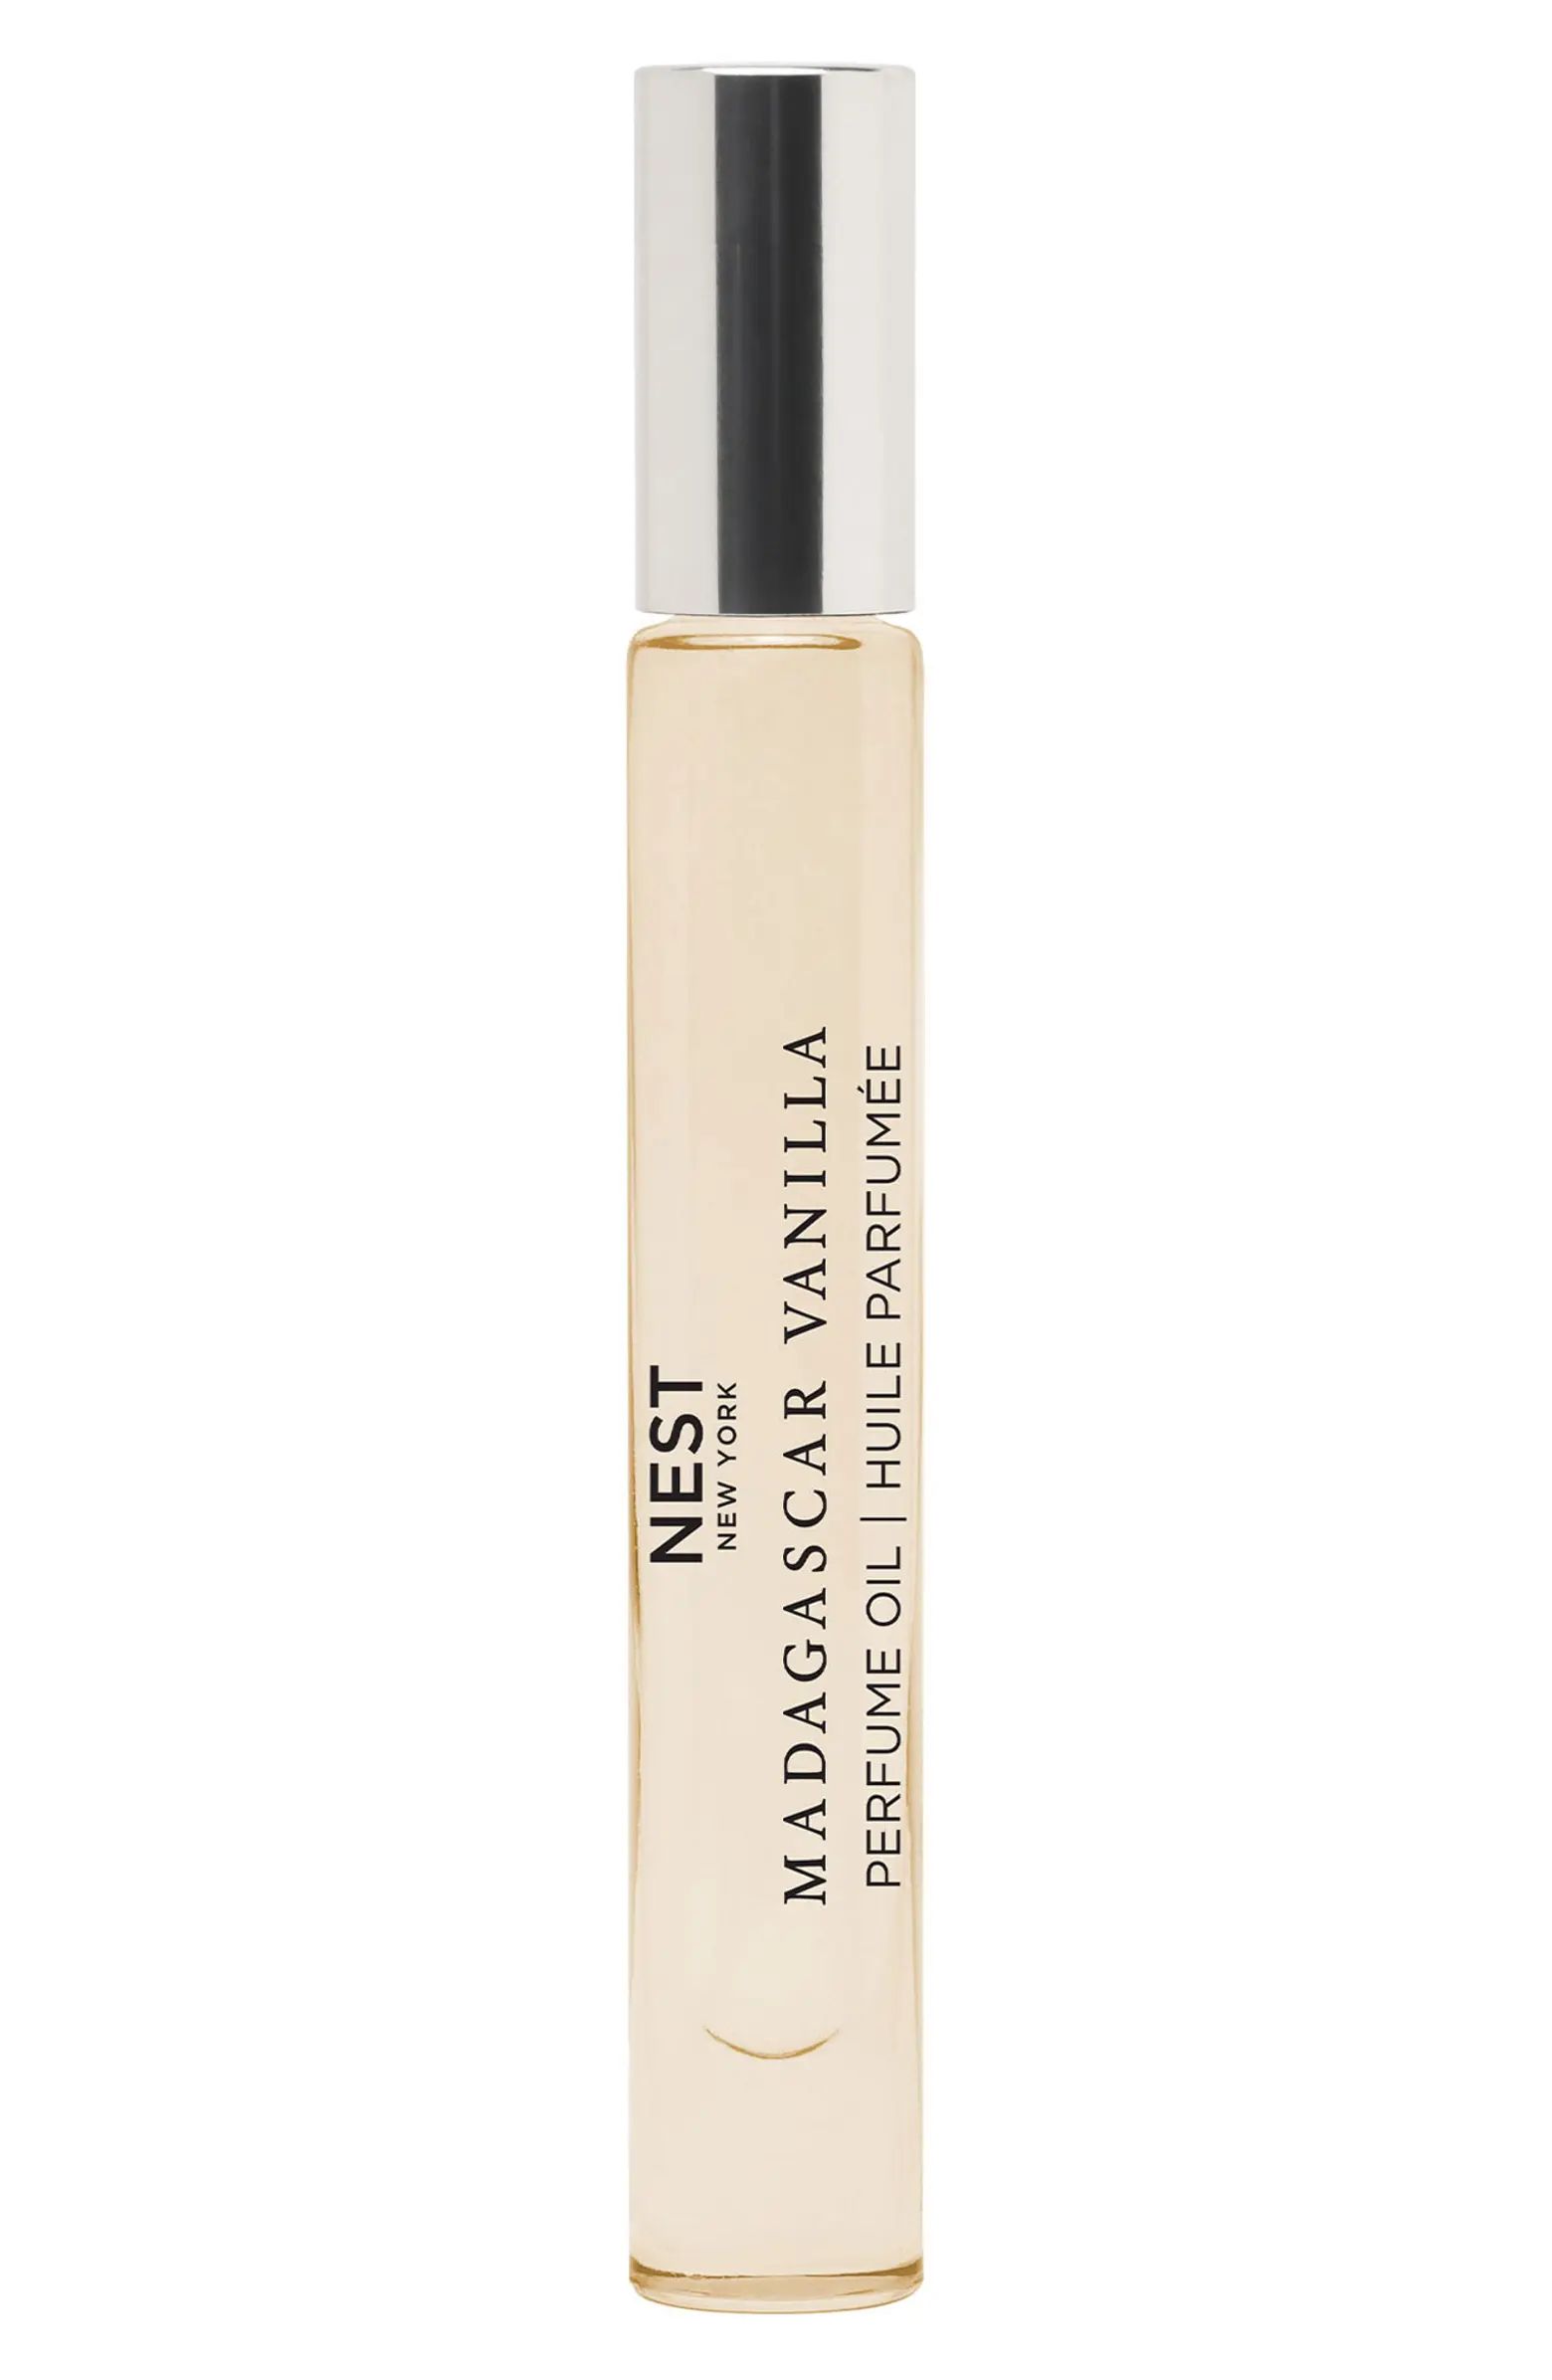 Madagascar Vanilla Perfume Oil | Nordstrom